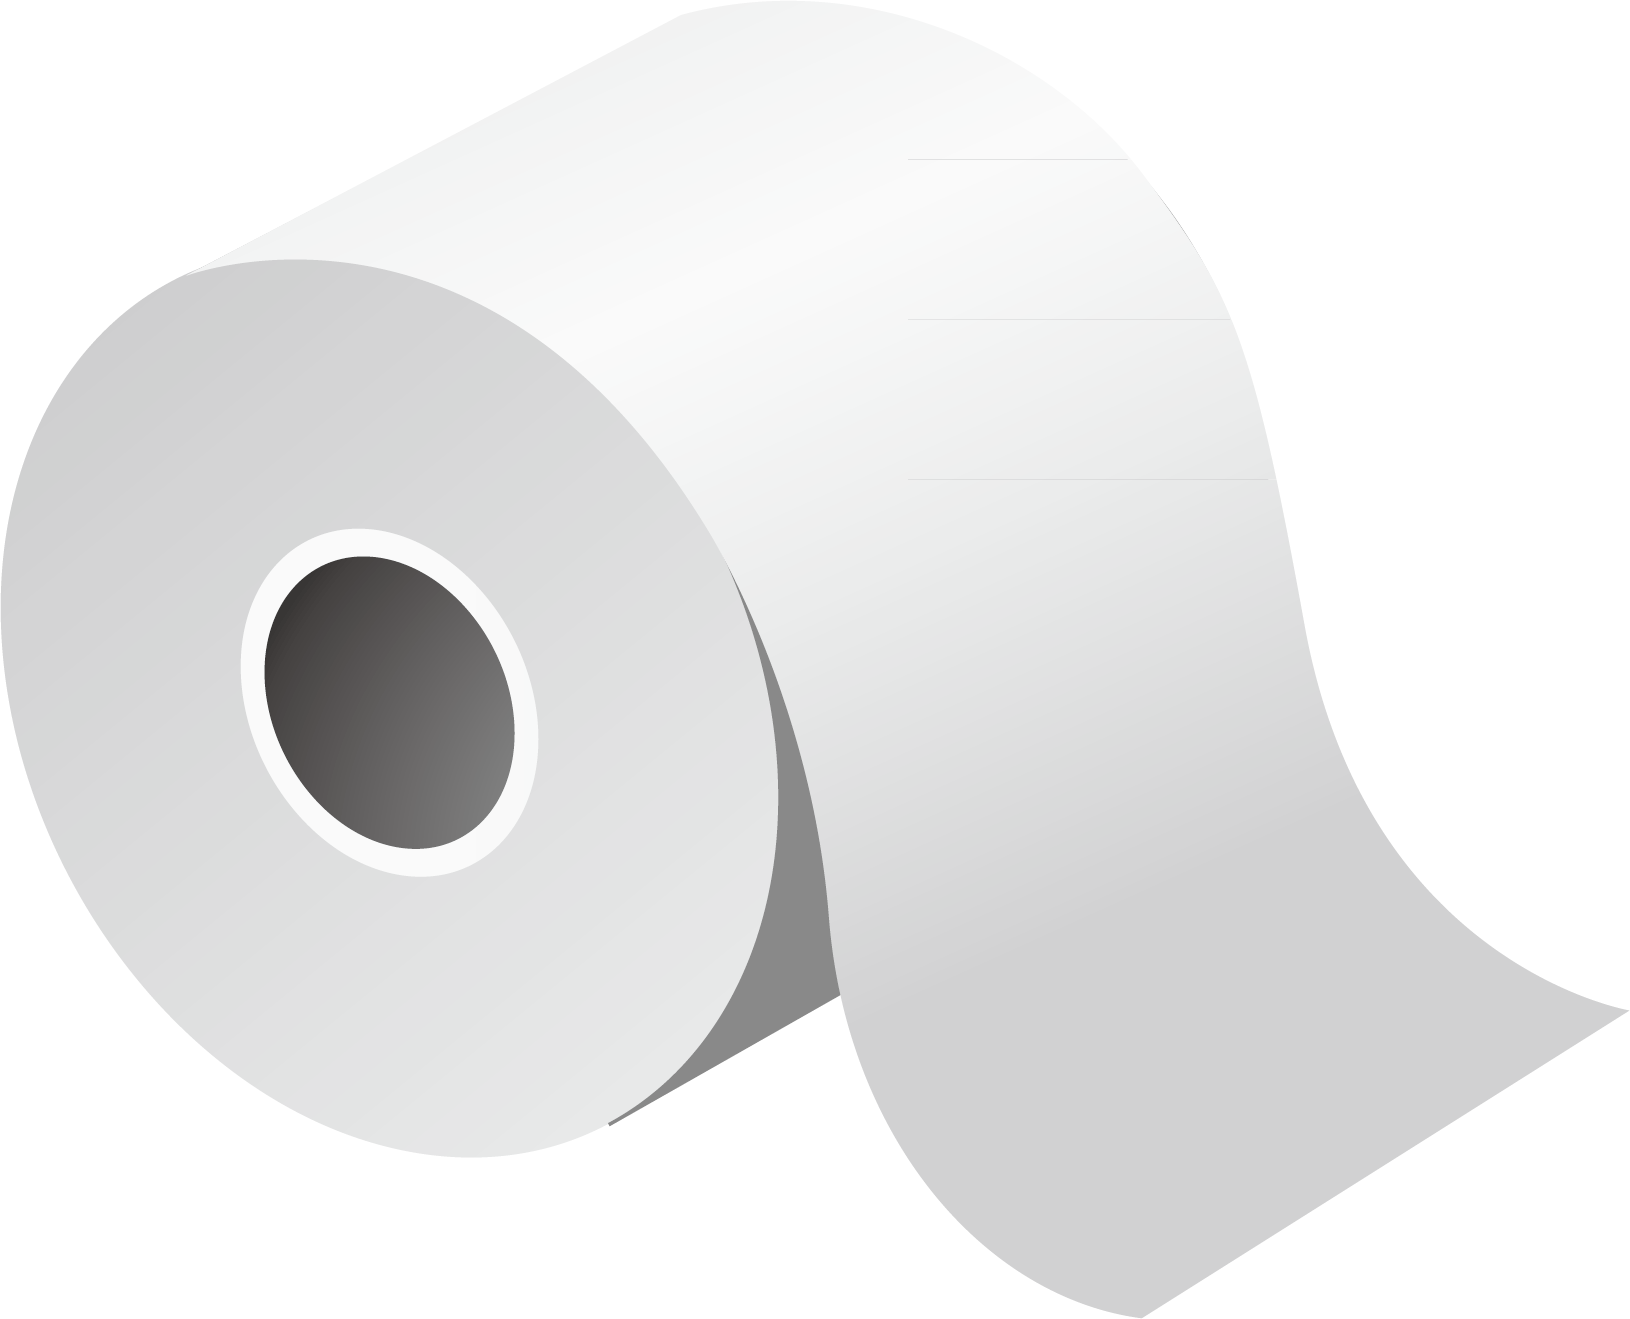 Toilettenpapier PNG HD -Bild